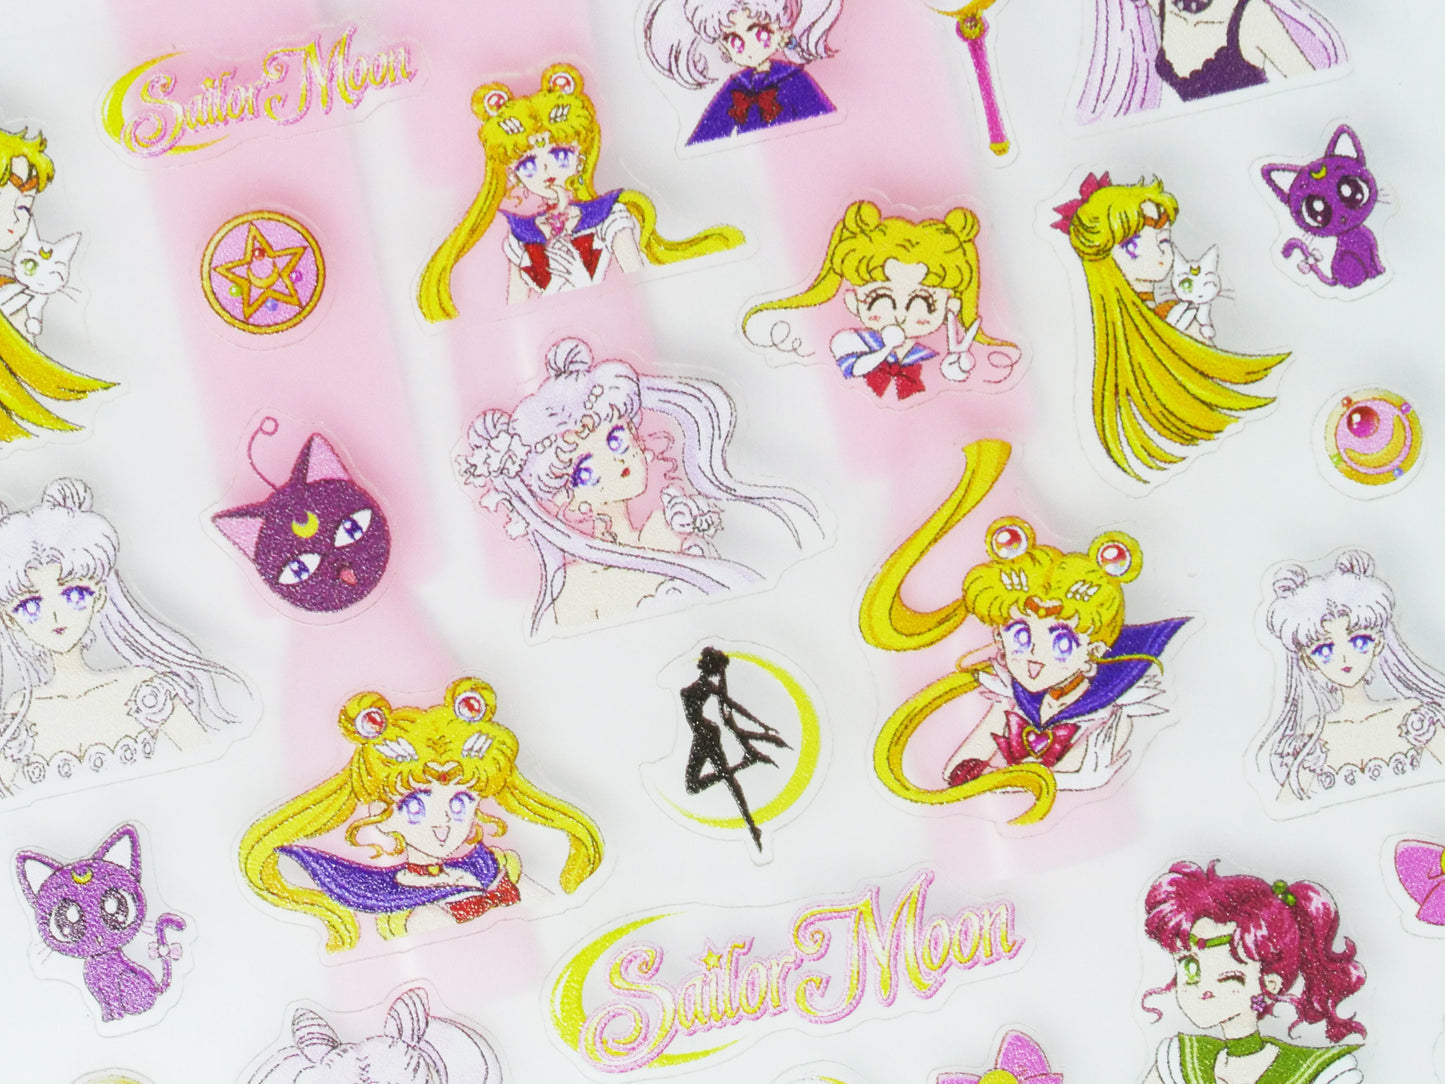 Chibi 90's Sailor Moon Nail Sticker/Cartoon Manga Anime Nail Art Stickers Self Adhesive Decals/ Ultra Think Usagi Tsukino Sailor Senshi